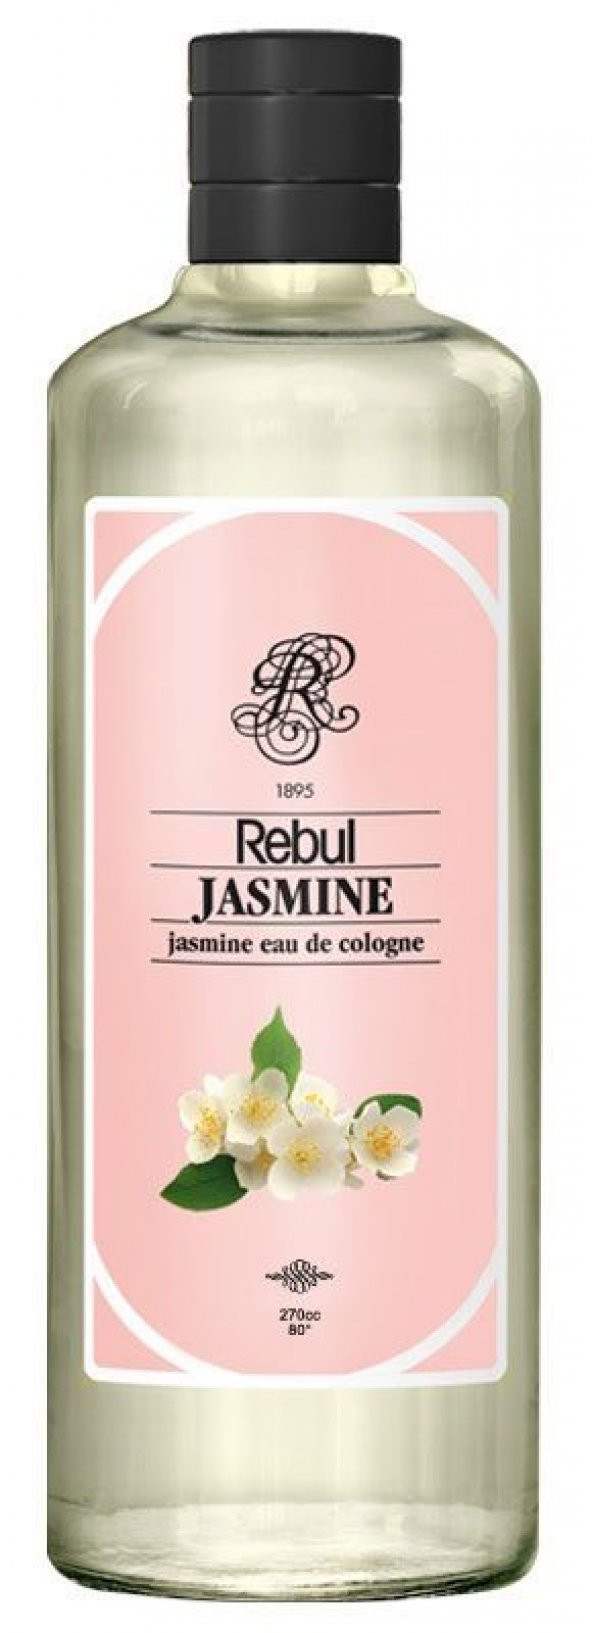 Rebul Jasmine (270 ml)